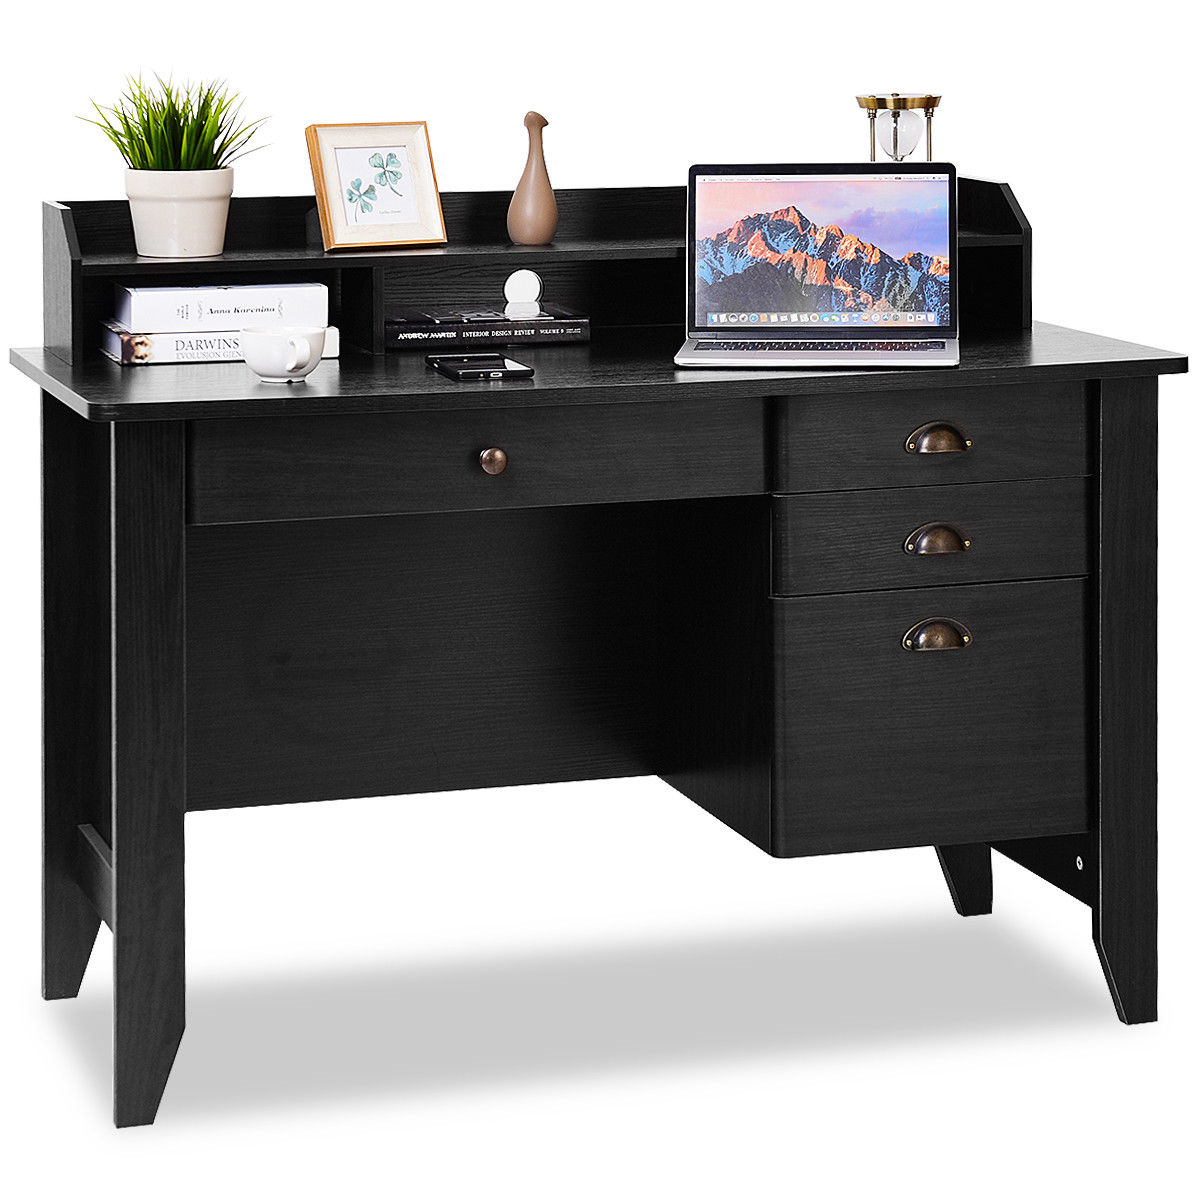 Computer Desk Laptop Writing Table Wood Workstation Home Office Furniture  black